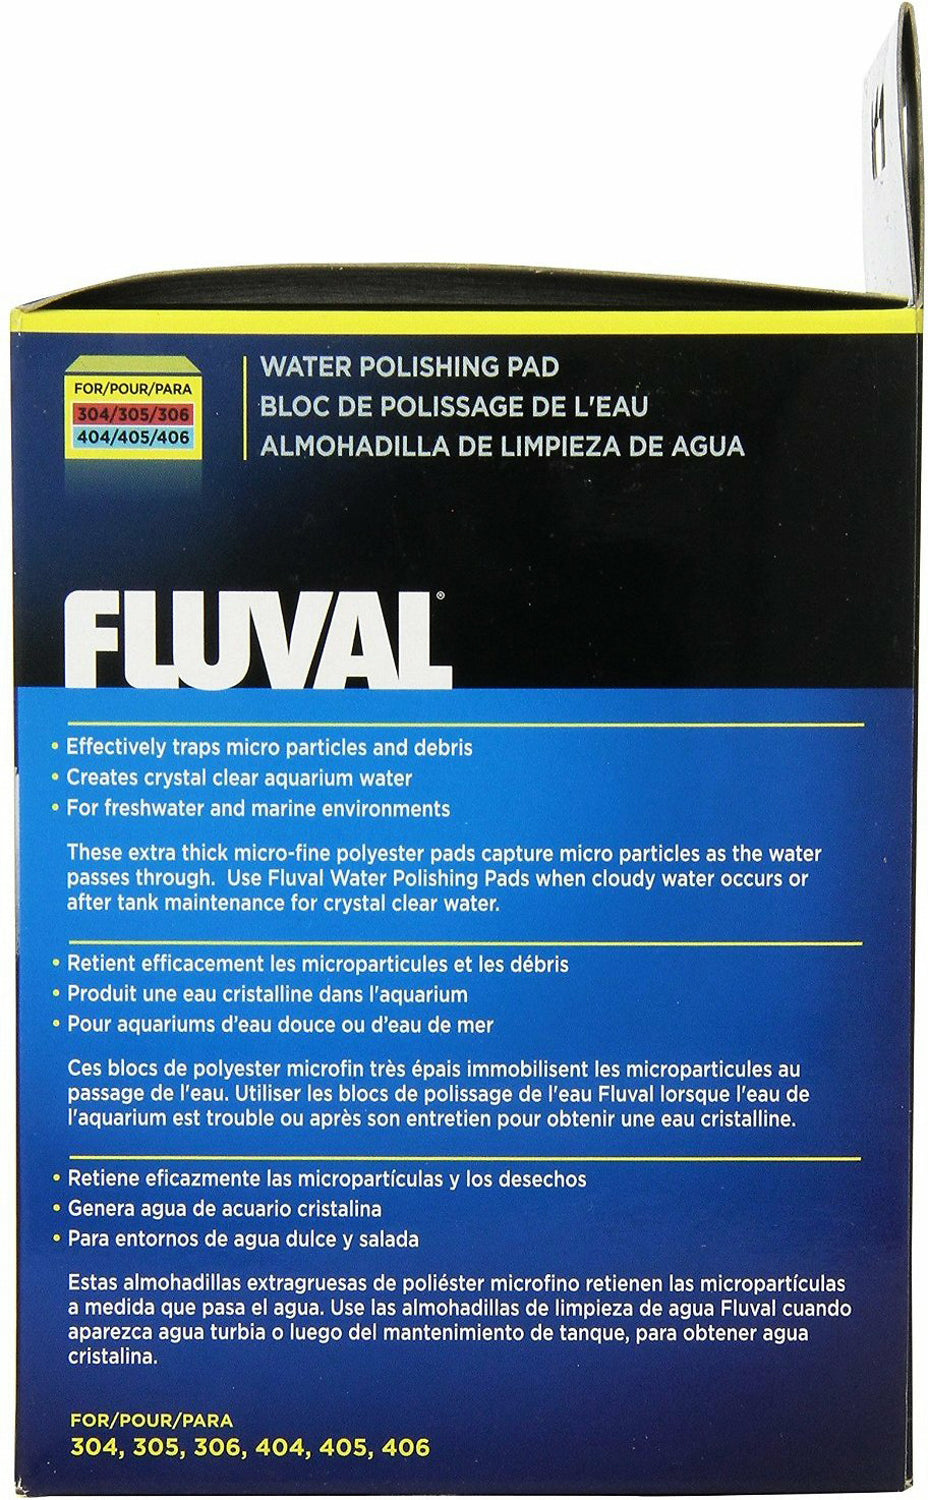 Fluval Water Polishing Pad, Fits 304/305/404/405 Models by Hagen, 6pk x 12pk